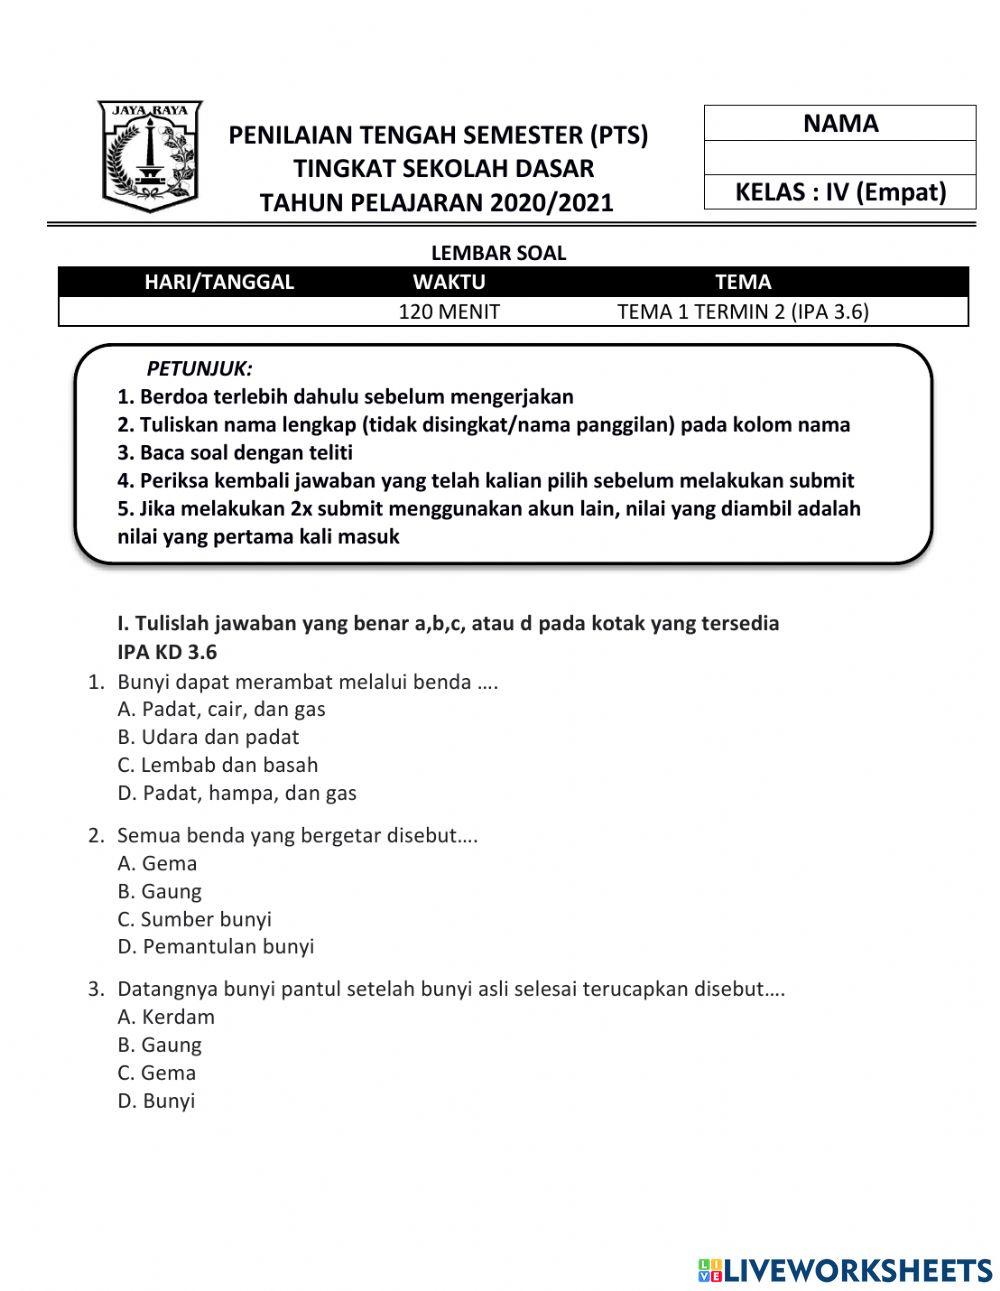 PTS IPA Tema 1 (Remedial)